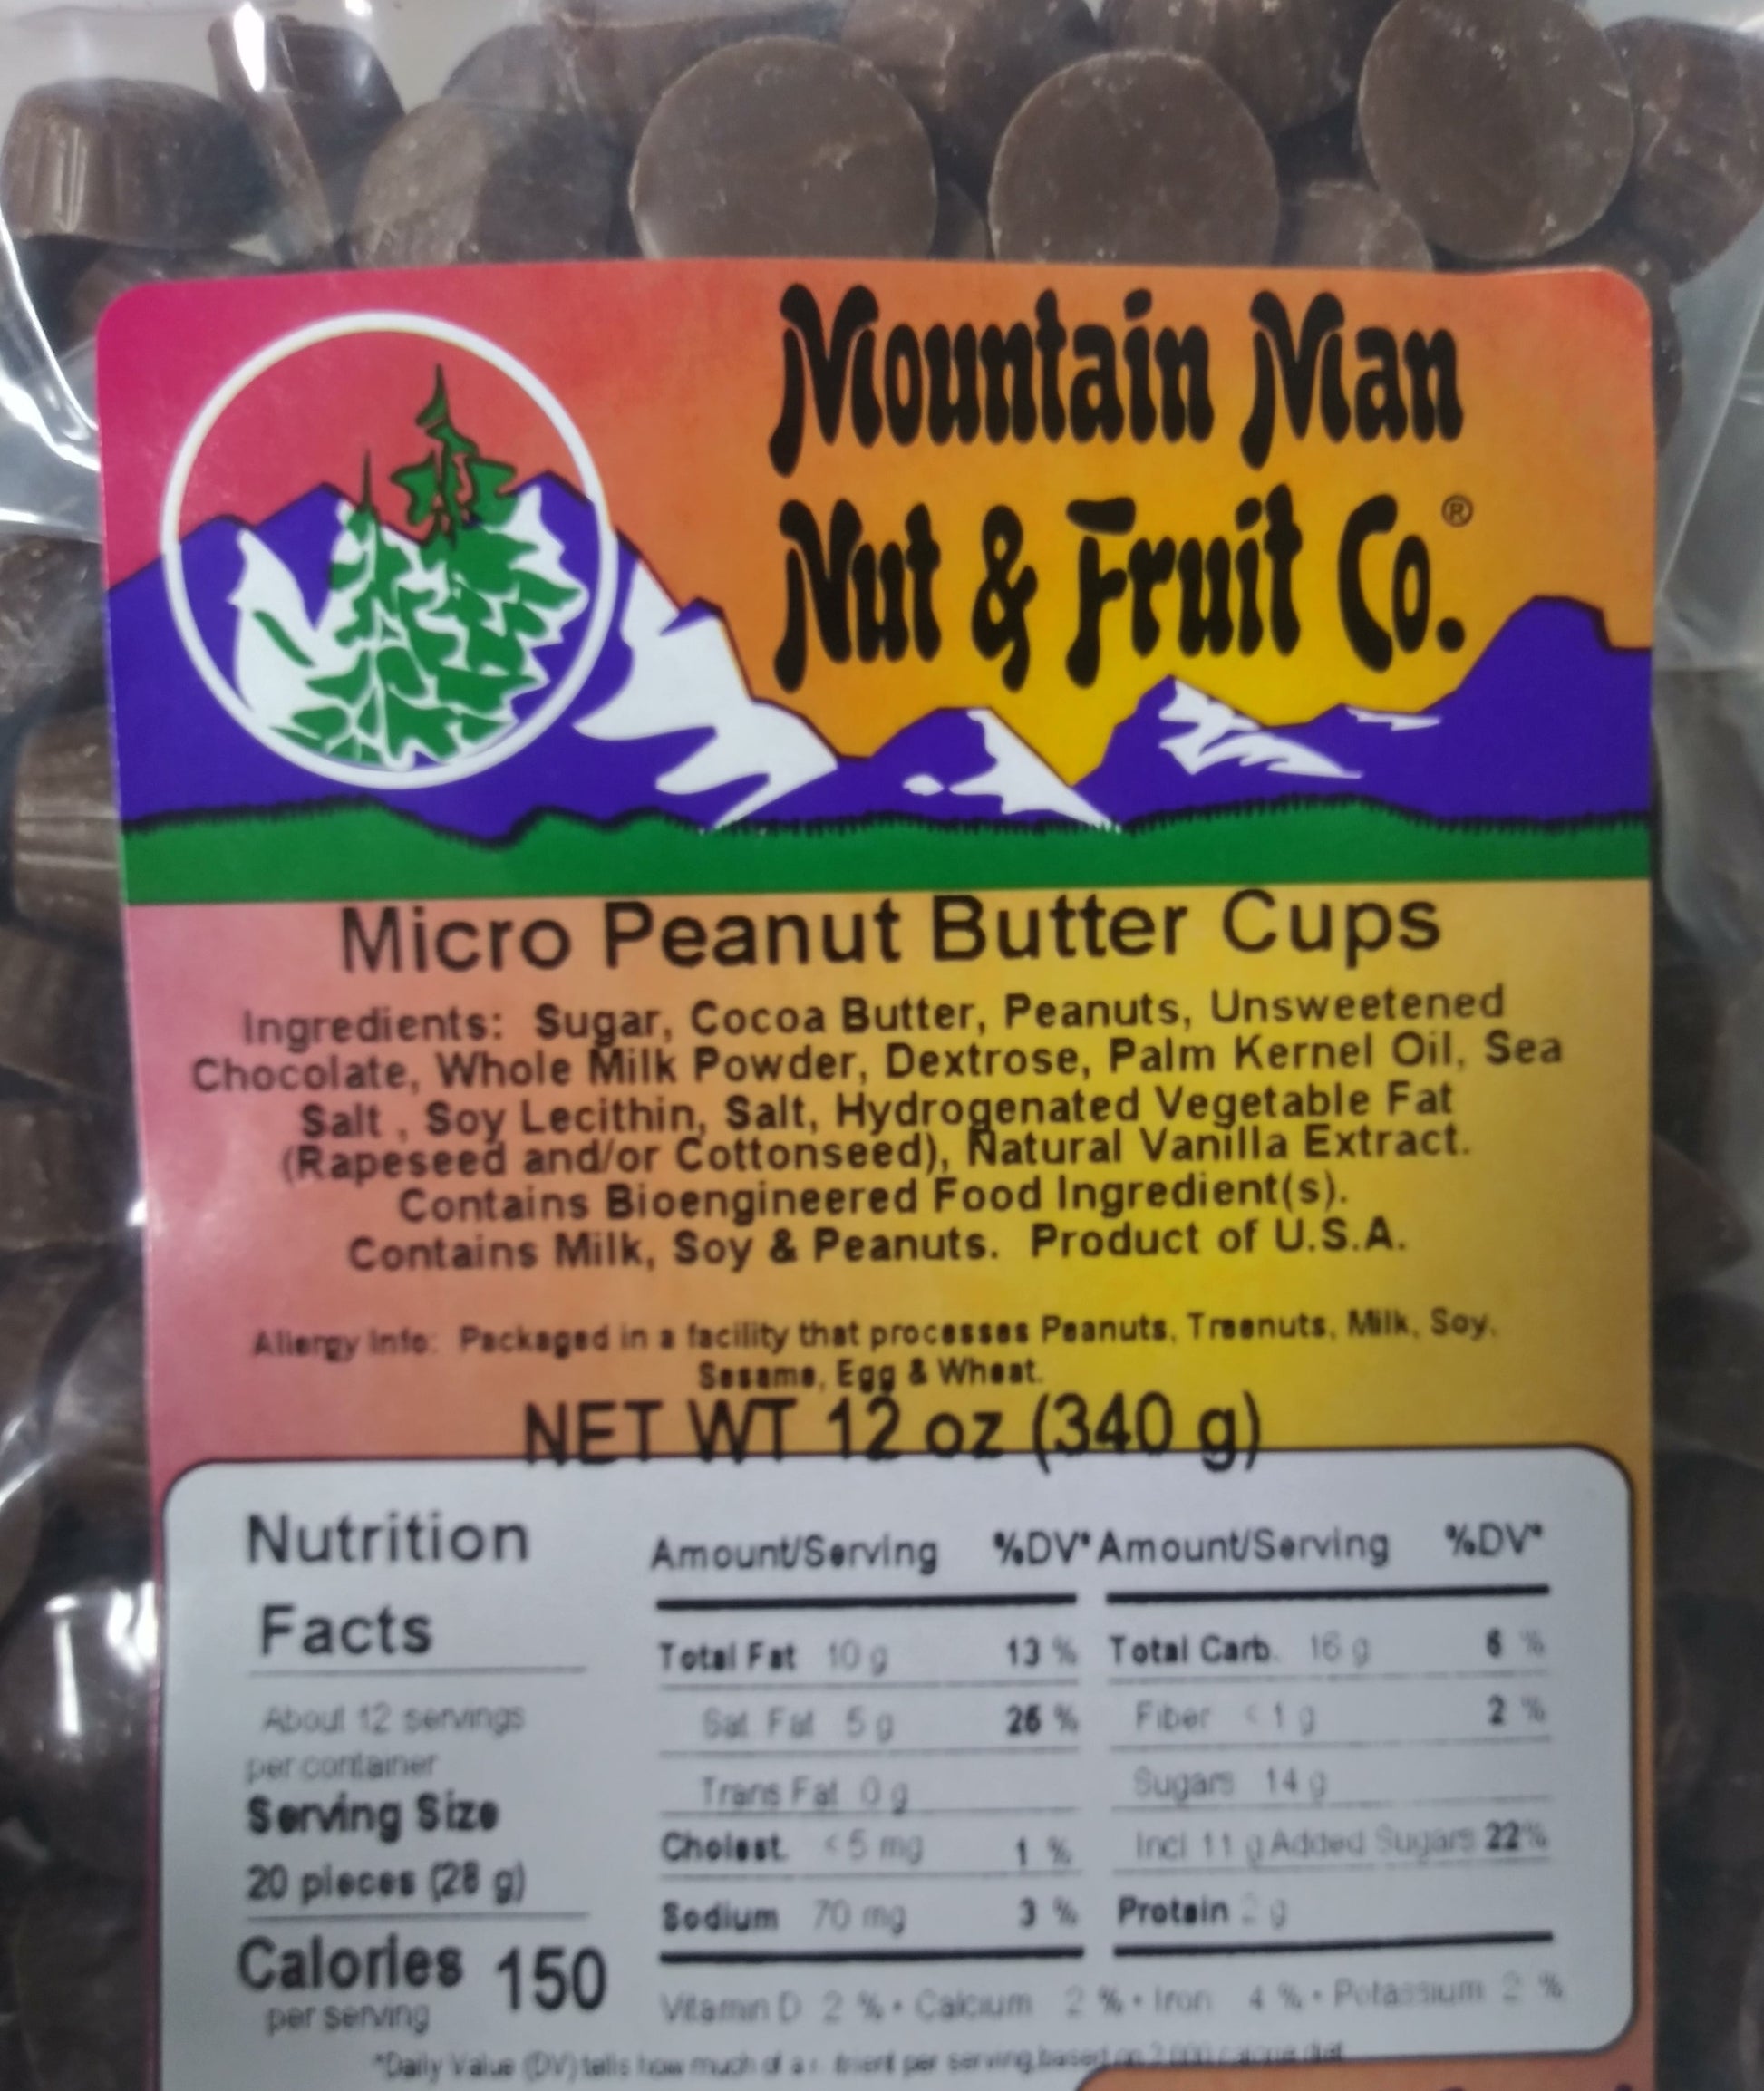 Micro Peanut Butter Cups Label